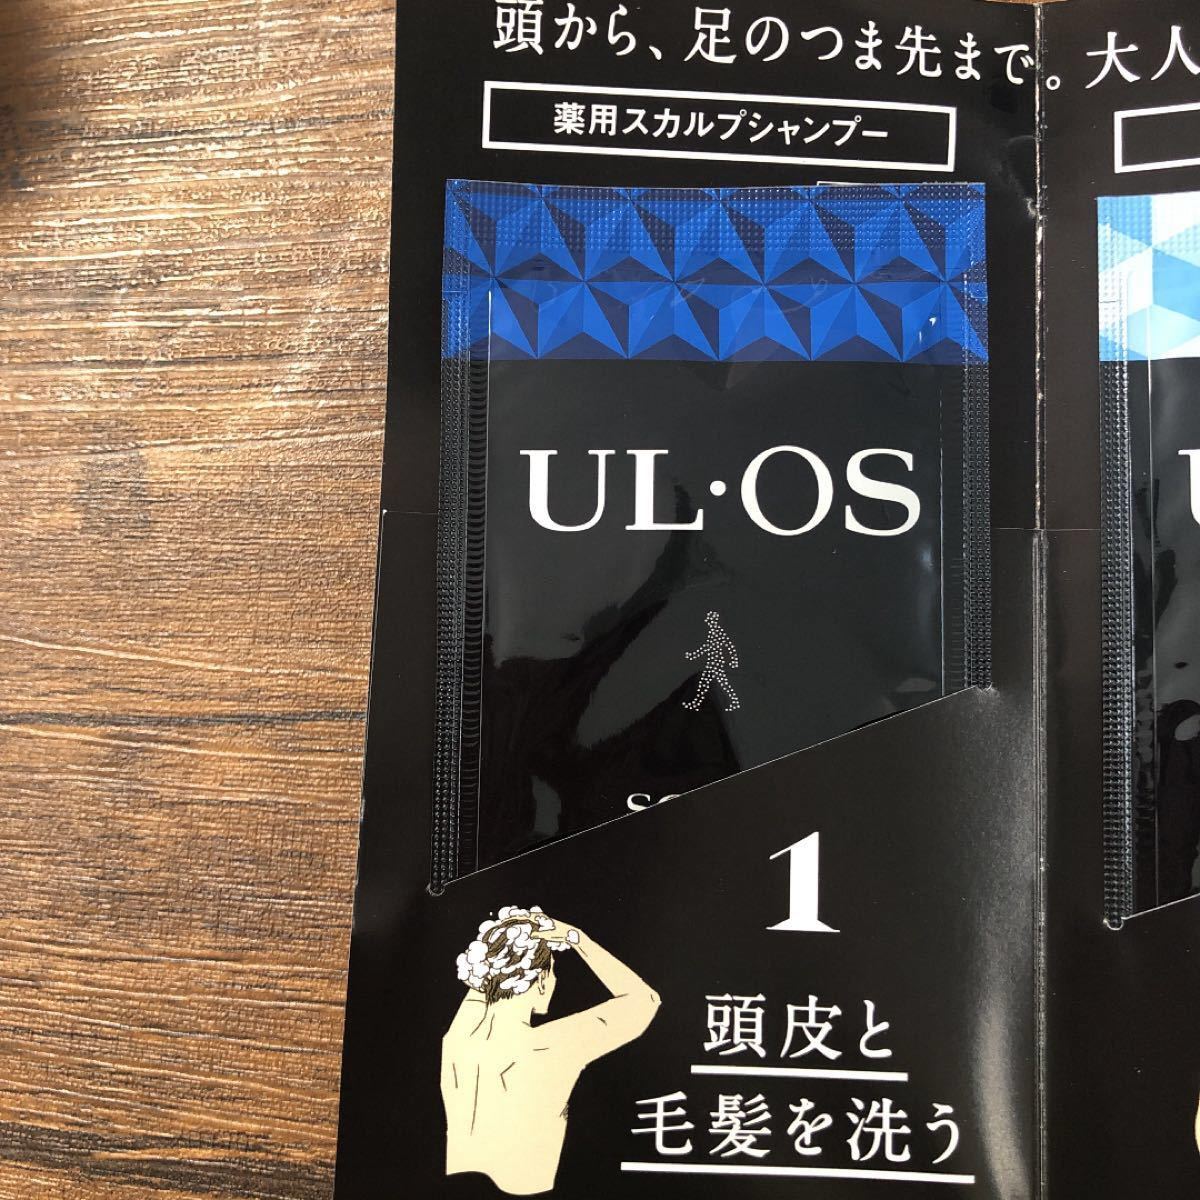 ulos ウル・オス 試供品 4セット シャンプー&スキンウォッシュ&ローション